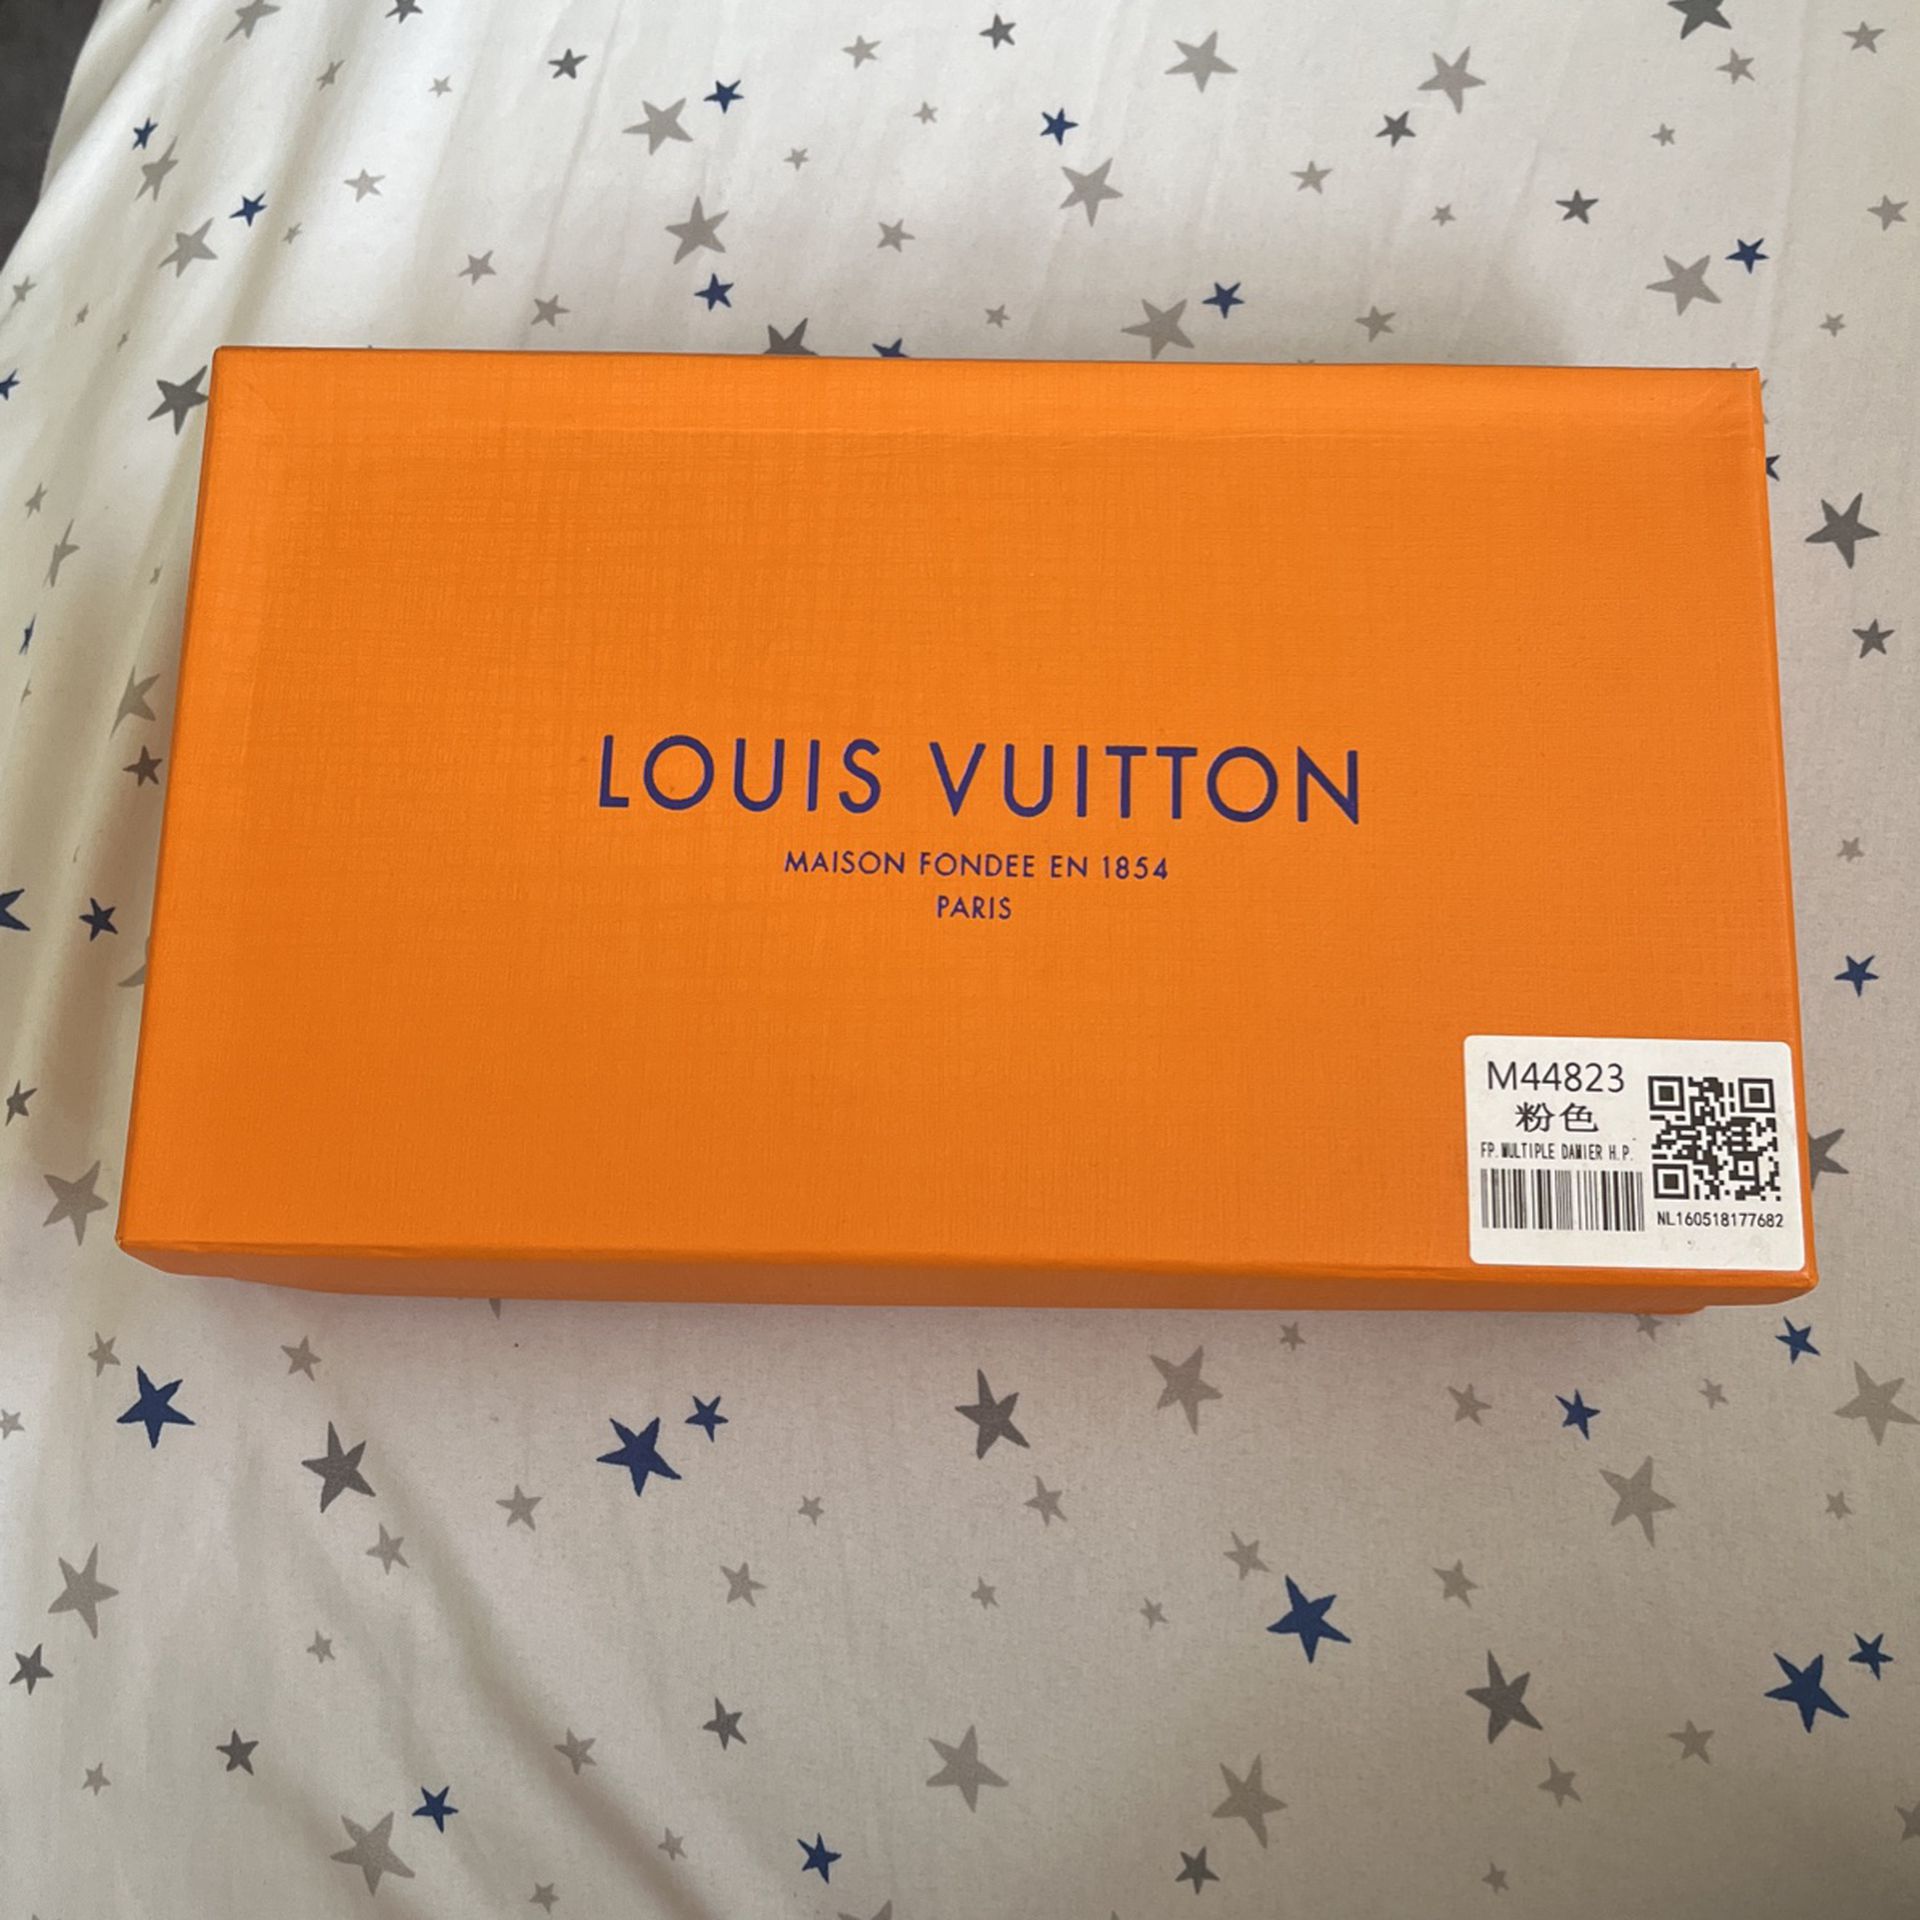 Louis Vuitton Woman’s Wallet Maison Fondee En 1854